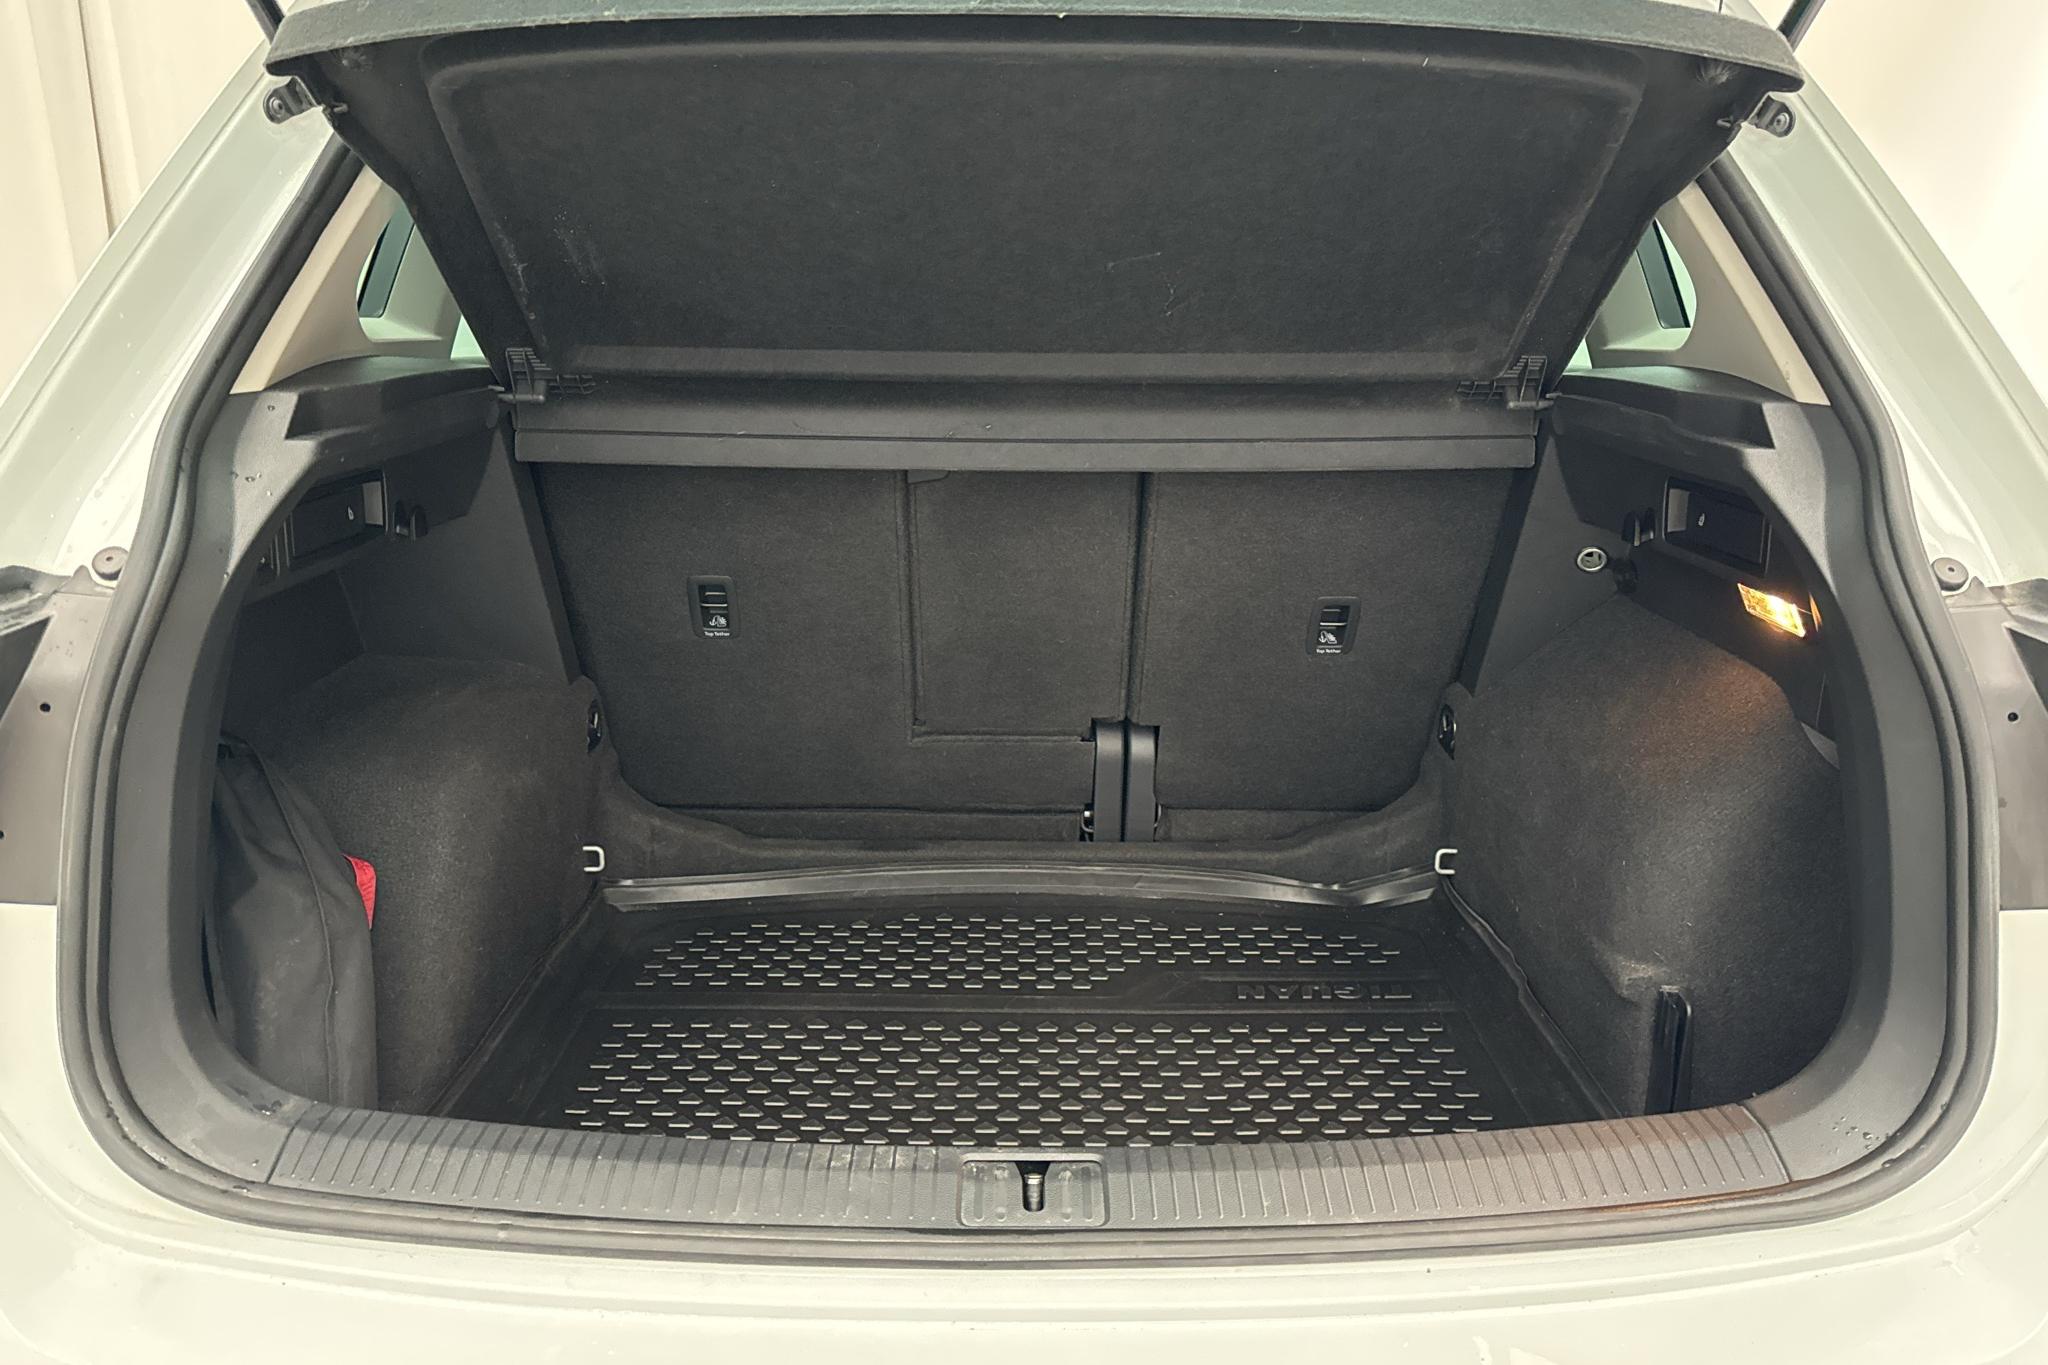 VW Tiguan 2.0 TDI 4MOTION (150hk) - 8 883 mil - Automat - vit - 2021